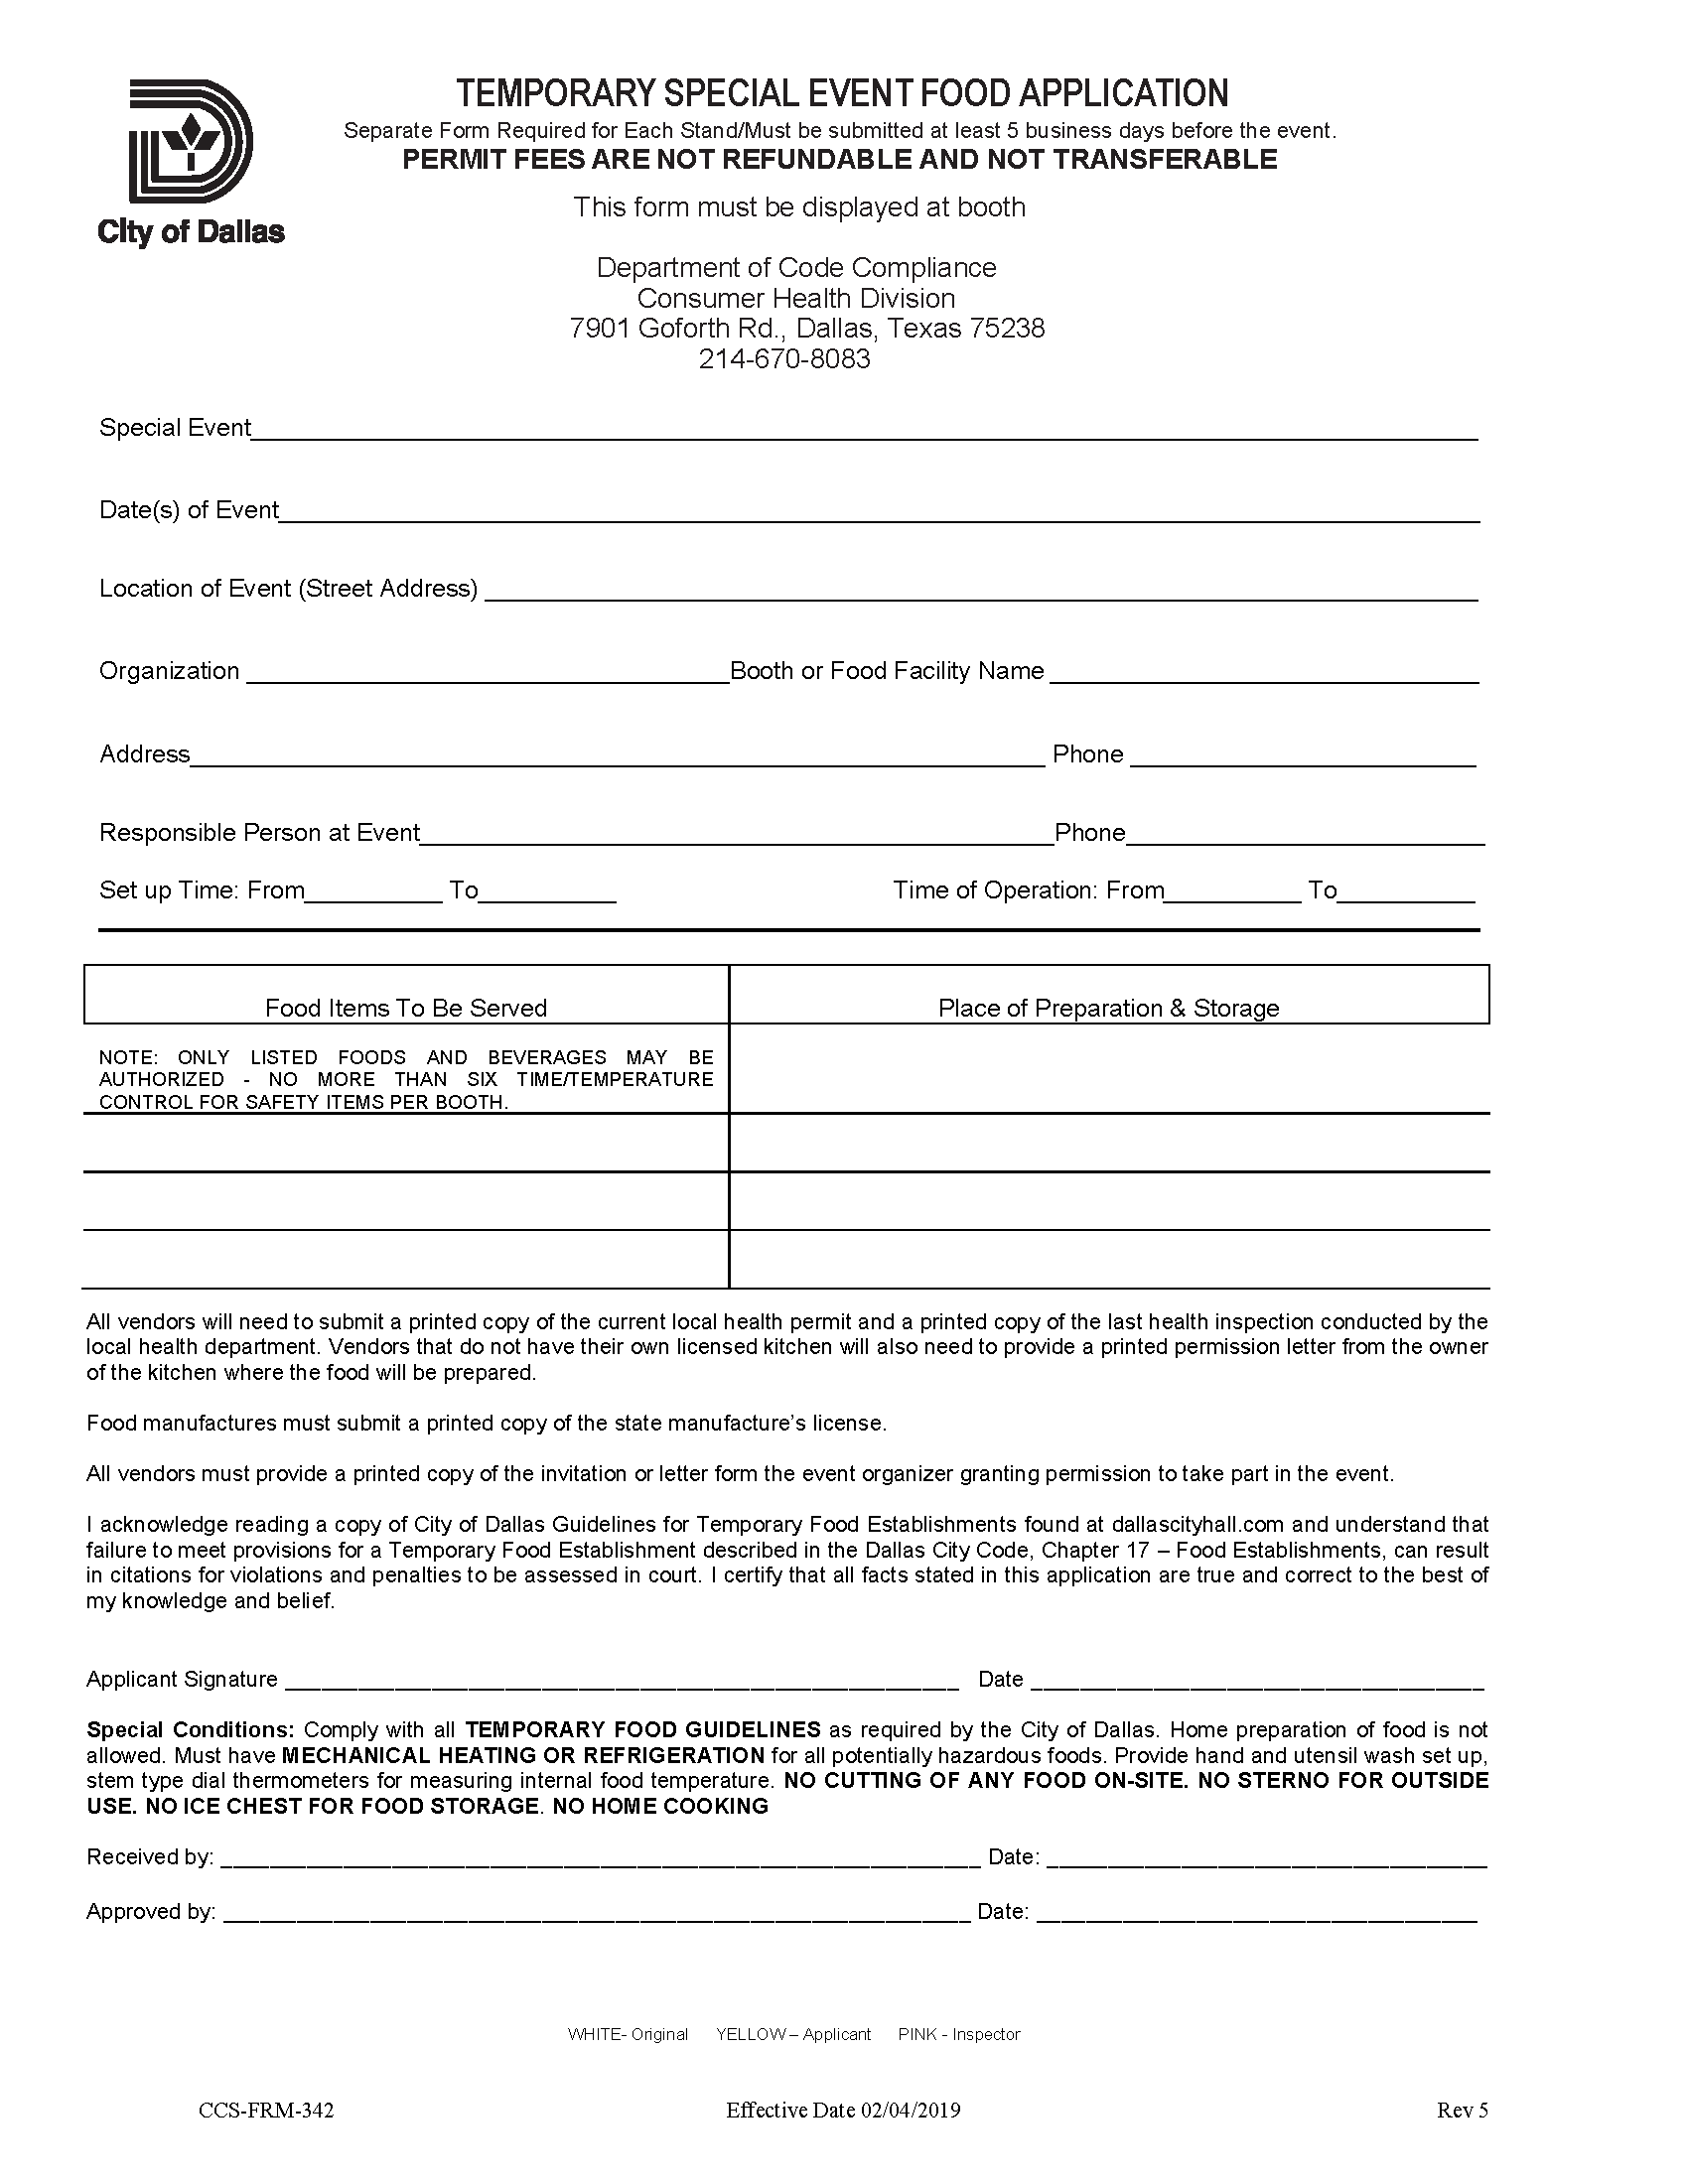 CCS-FRM-342 Temporary Food Establishment Permit Request (Pre-printed).png